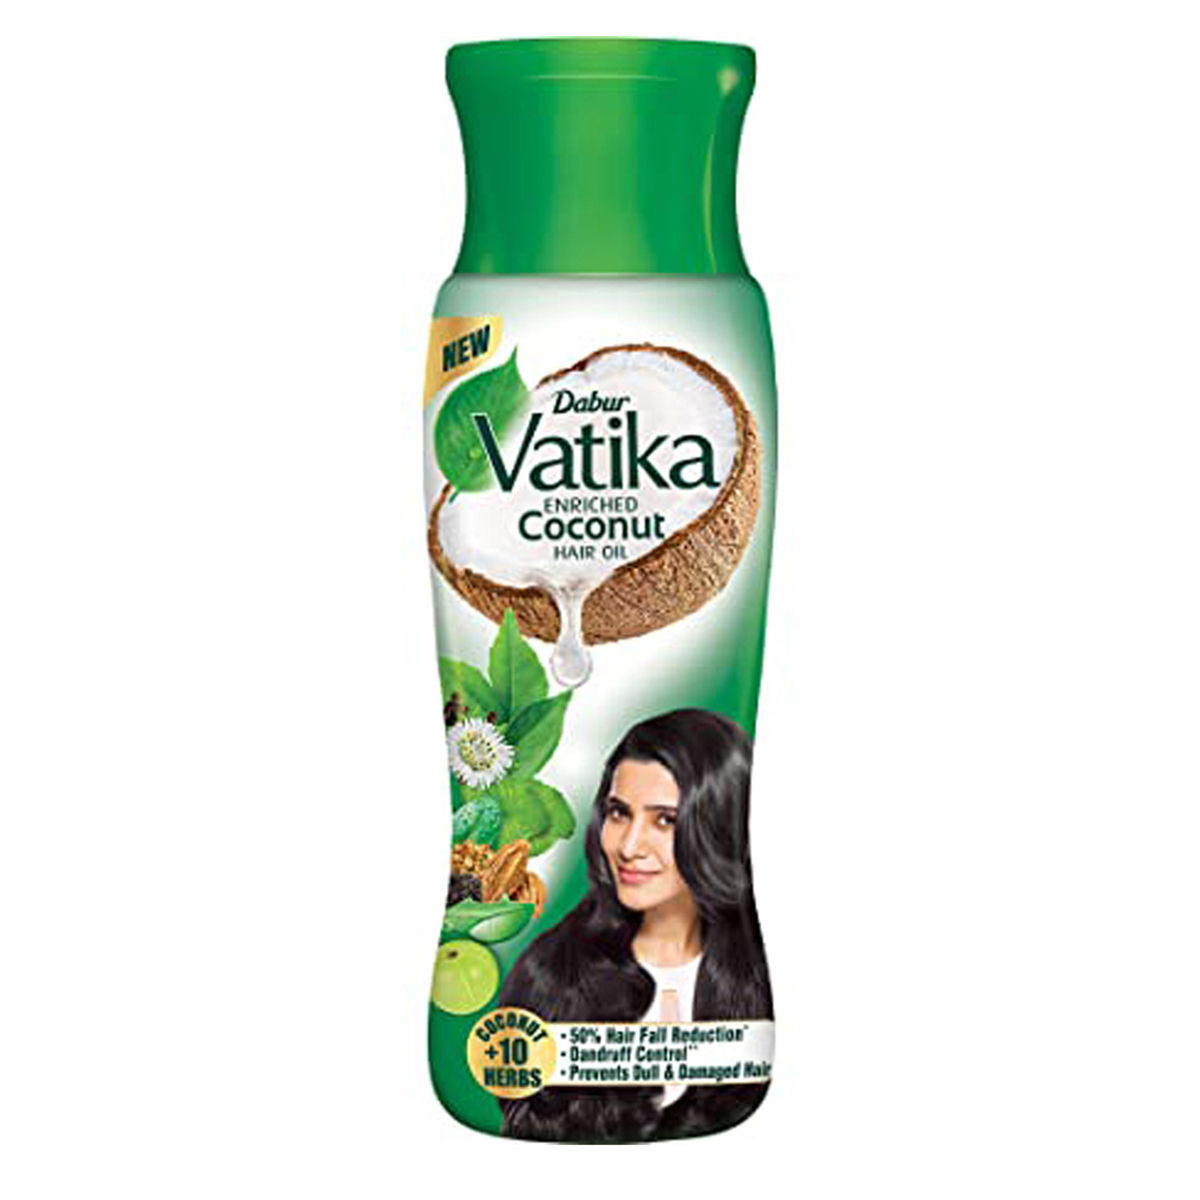 Buy Vatika Enriched Coconut Hair Oil, 300 ml Online